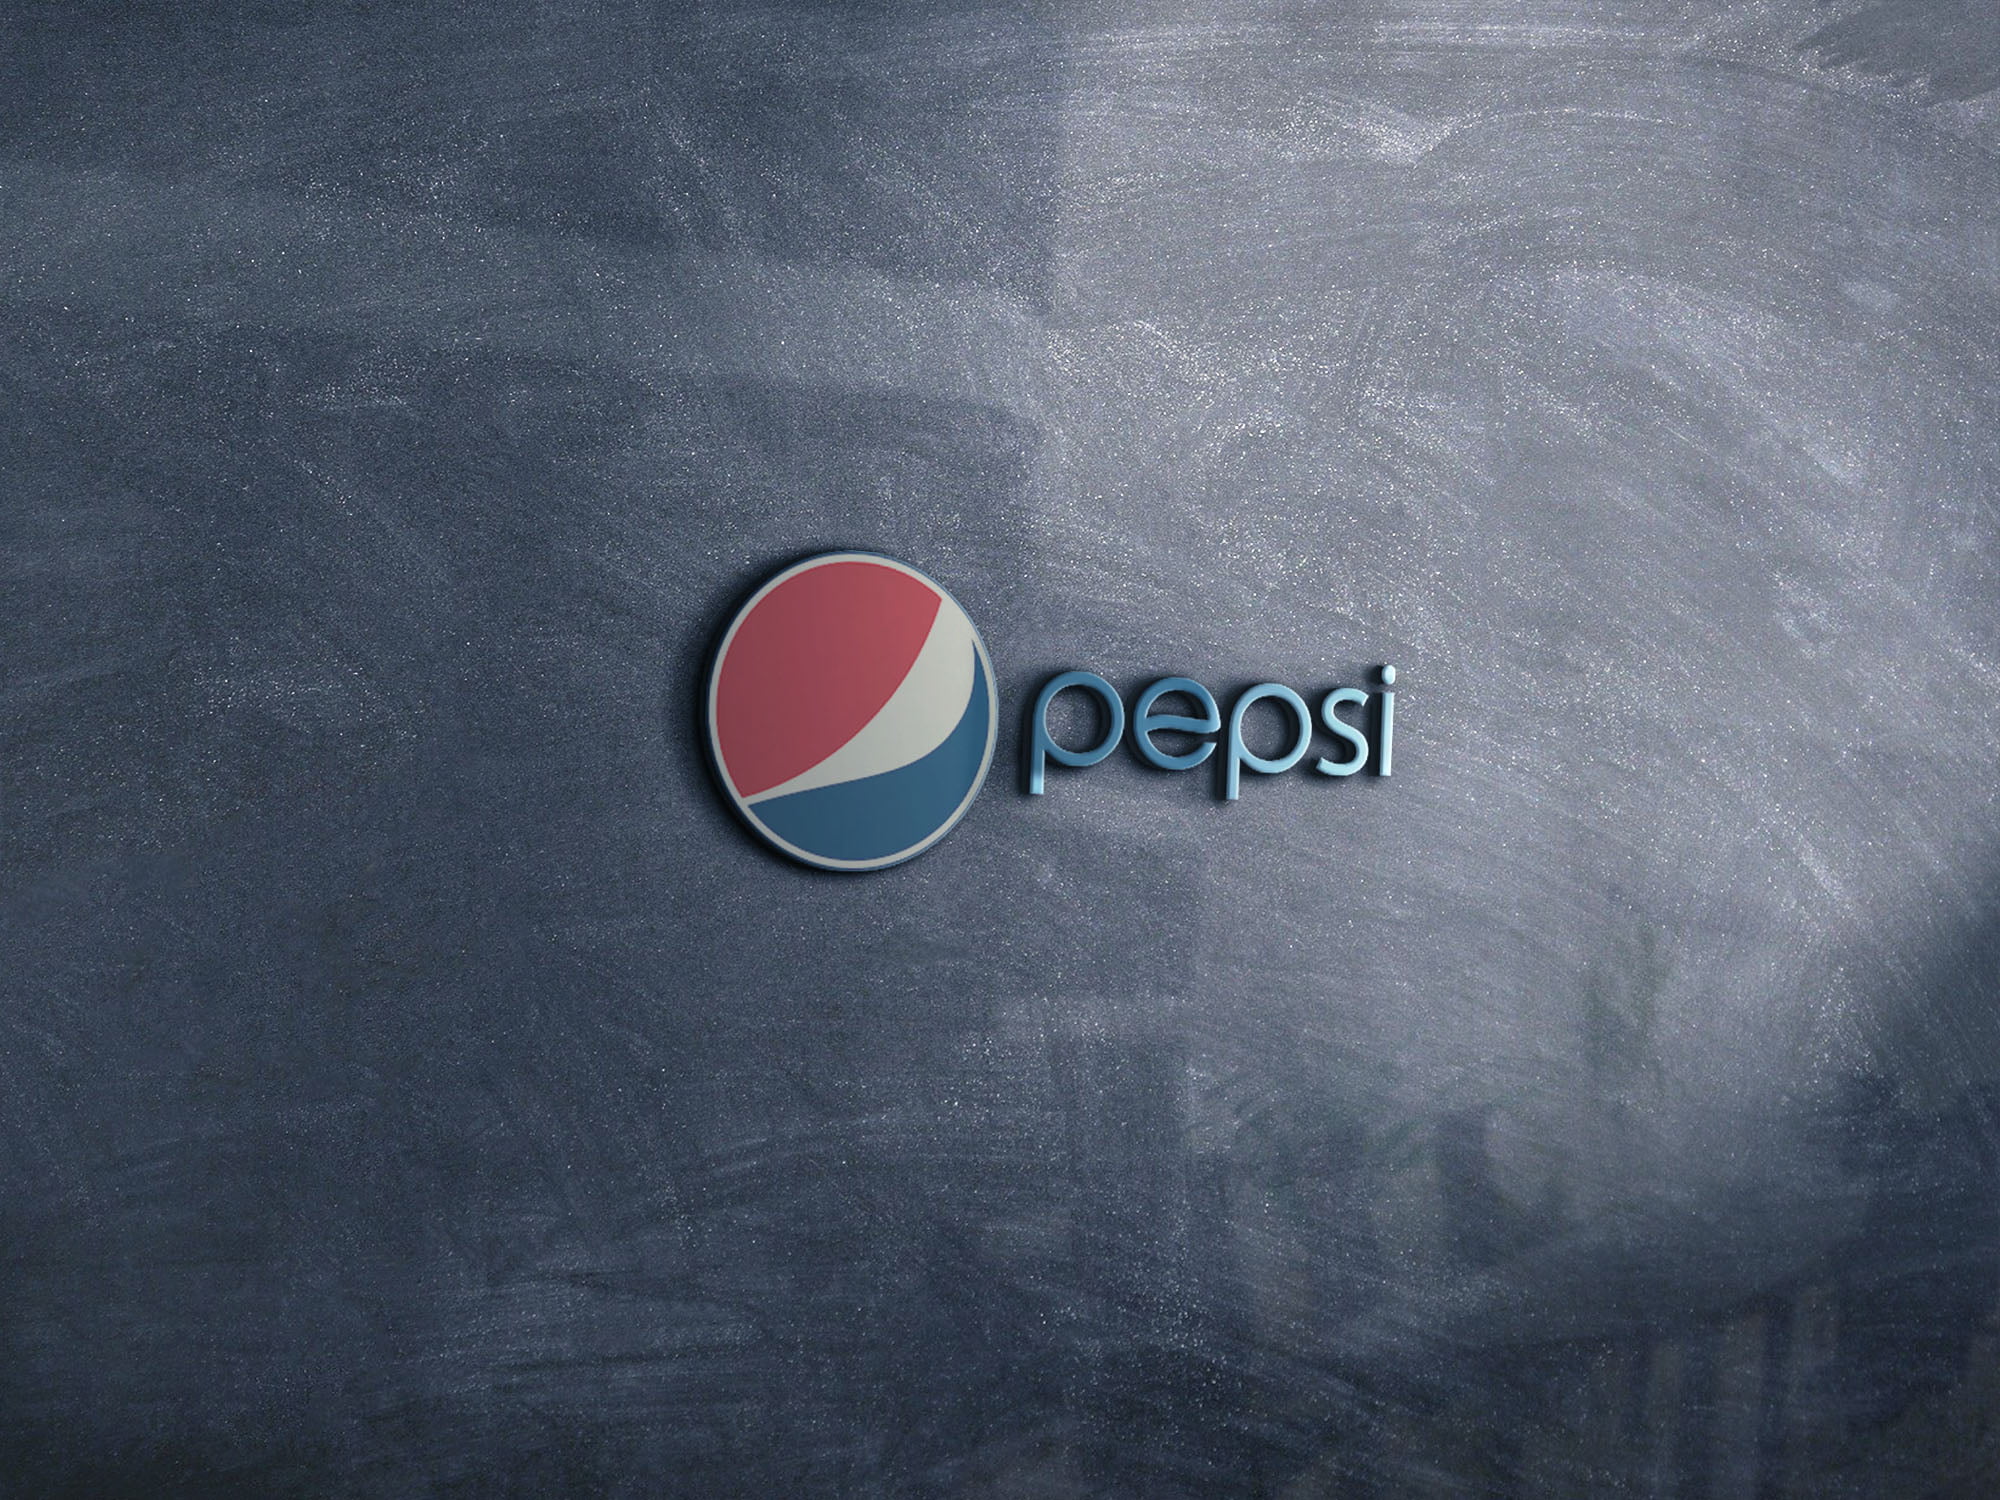 Pepsi on Glass window